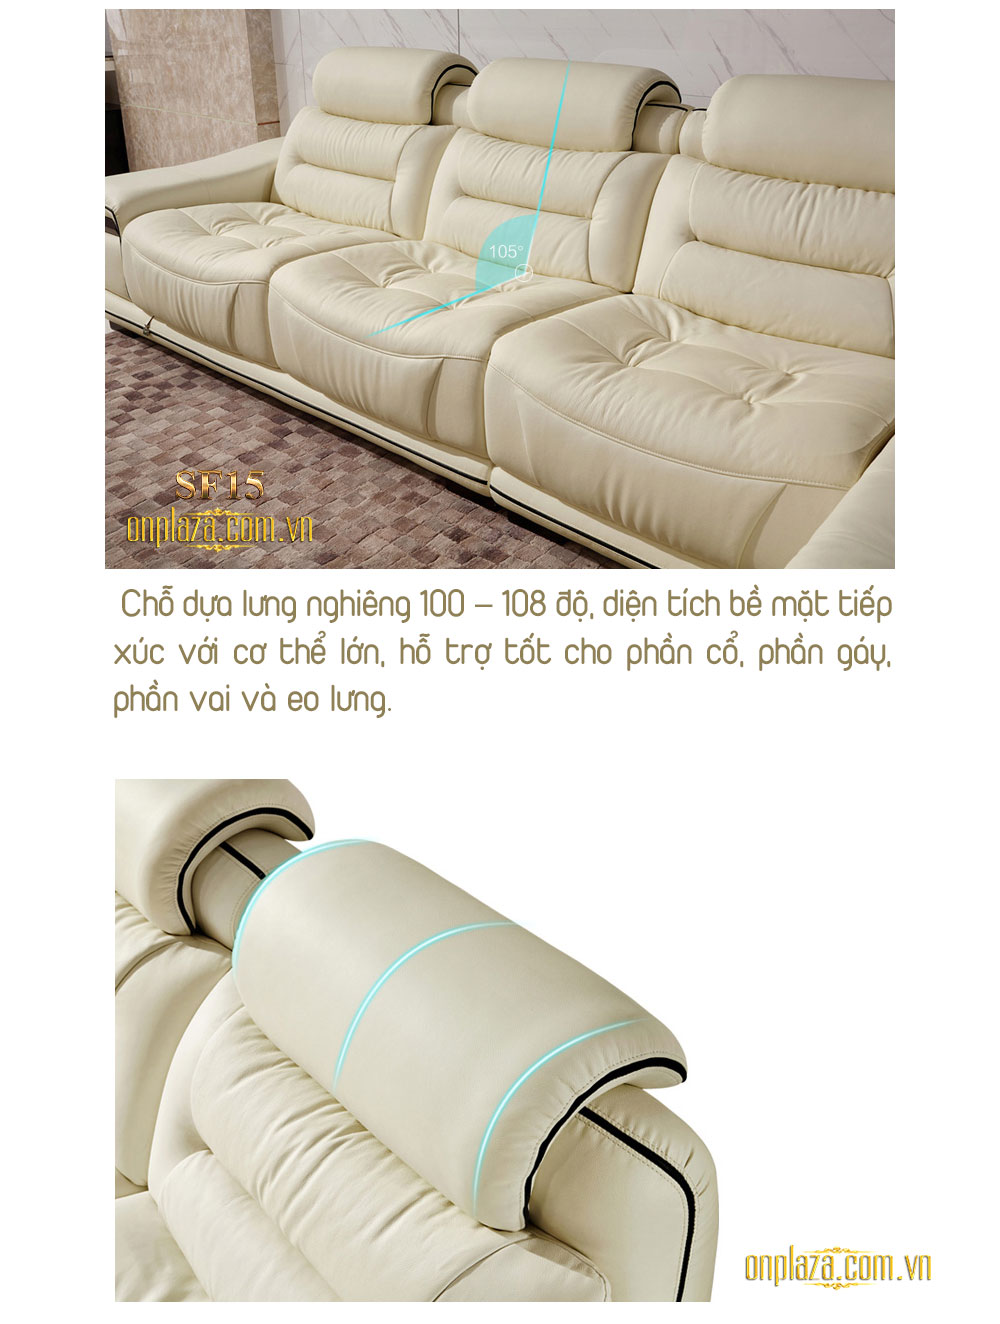 Bộ sofa da nhập khẩu cao cấp sắc kem trang nhã SF15